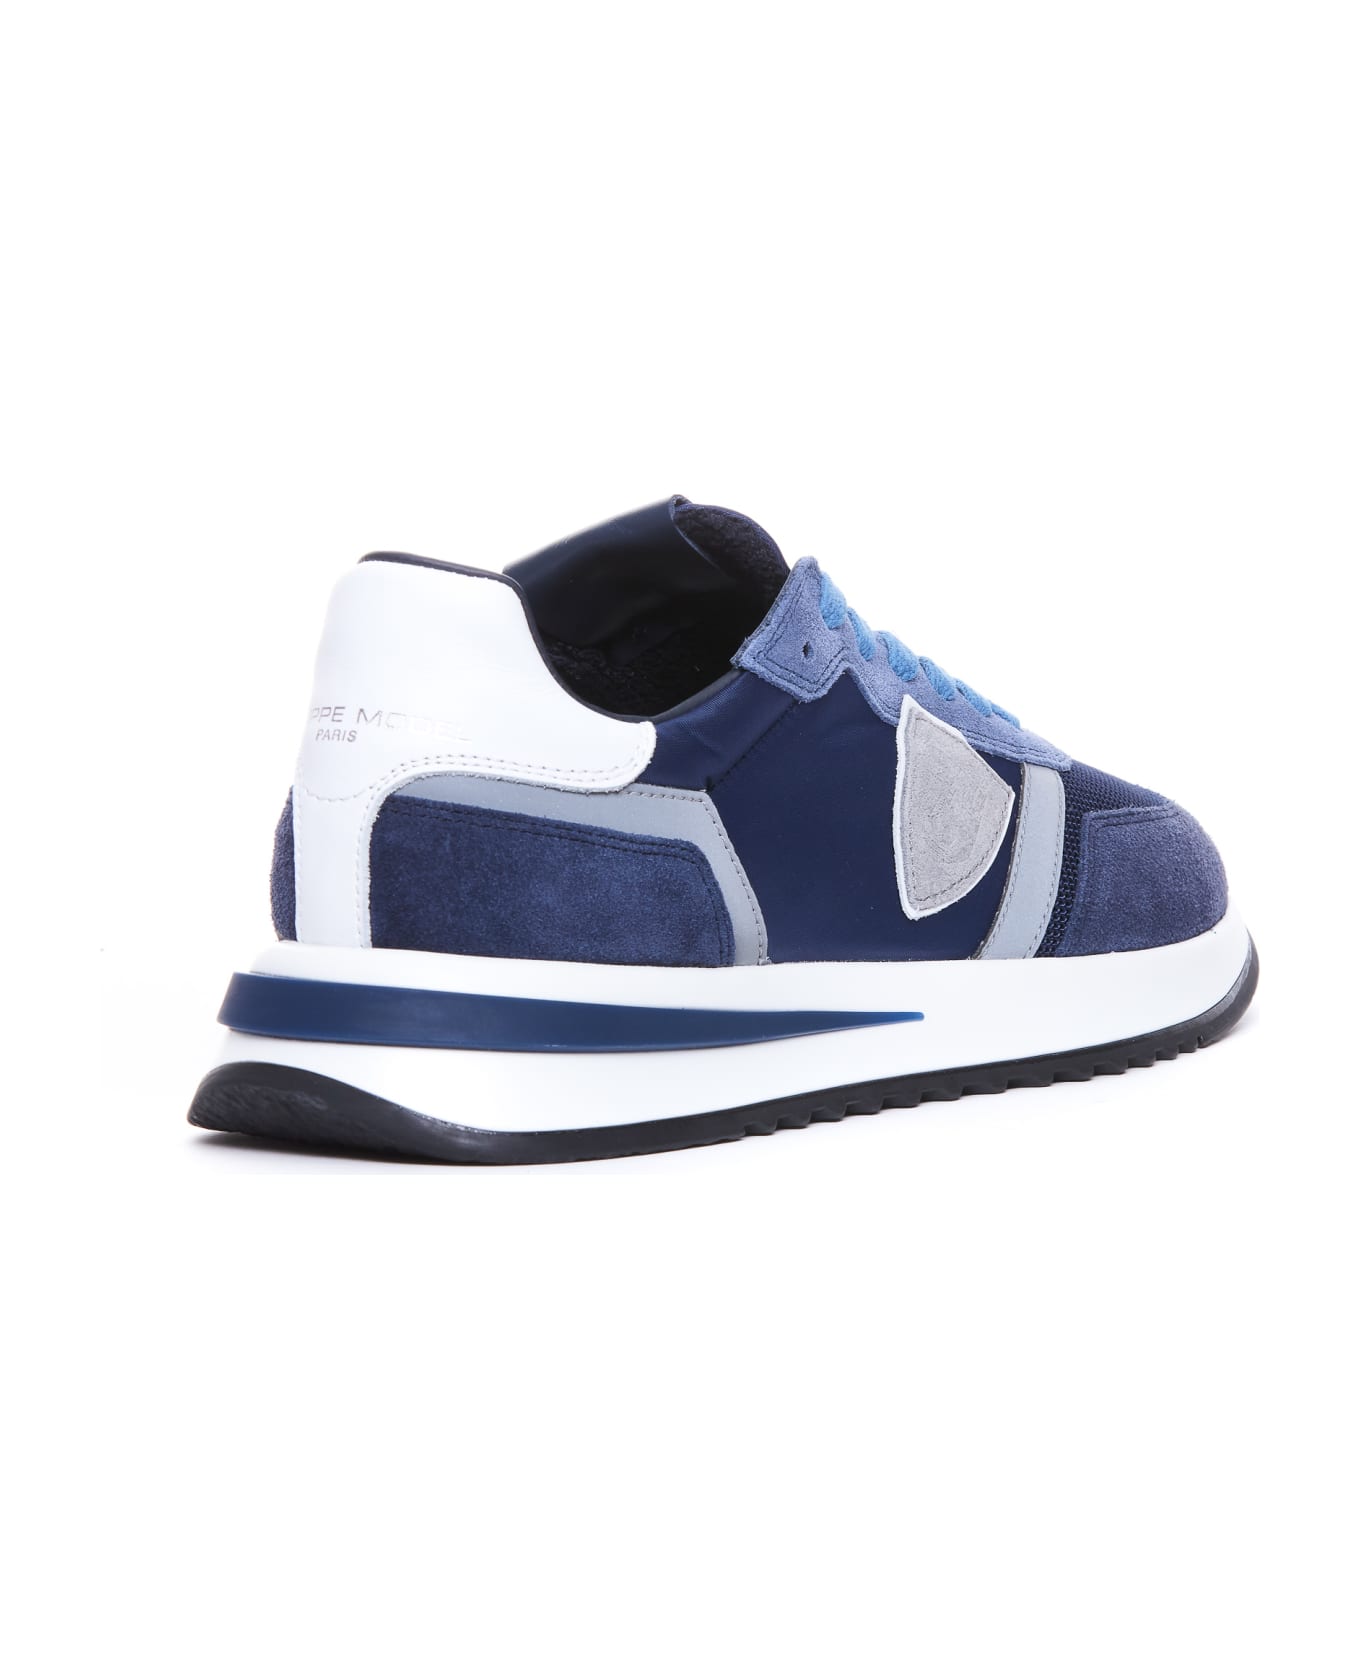 Philippe Model Tropez Sneakers - Blue